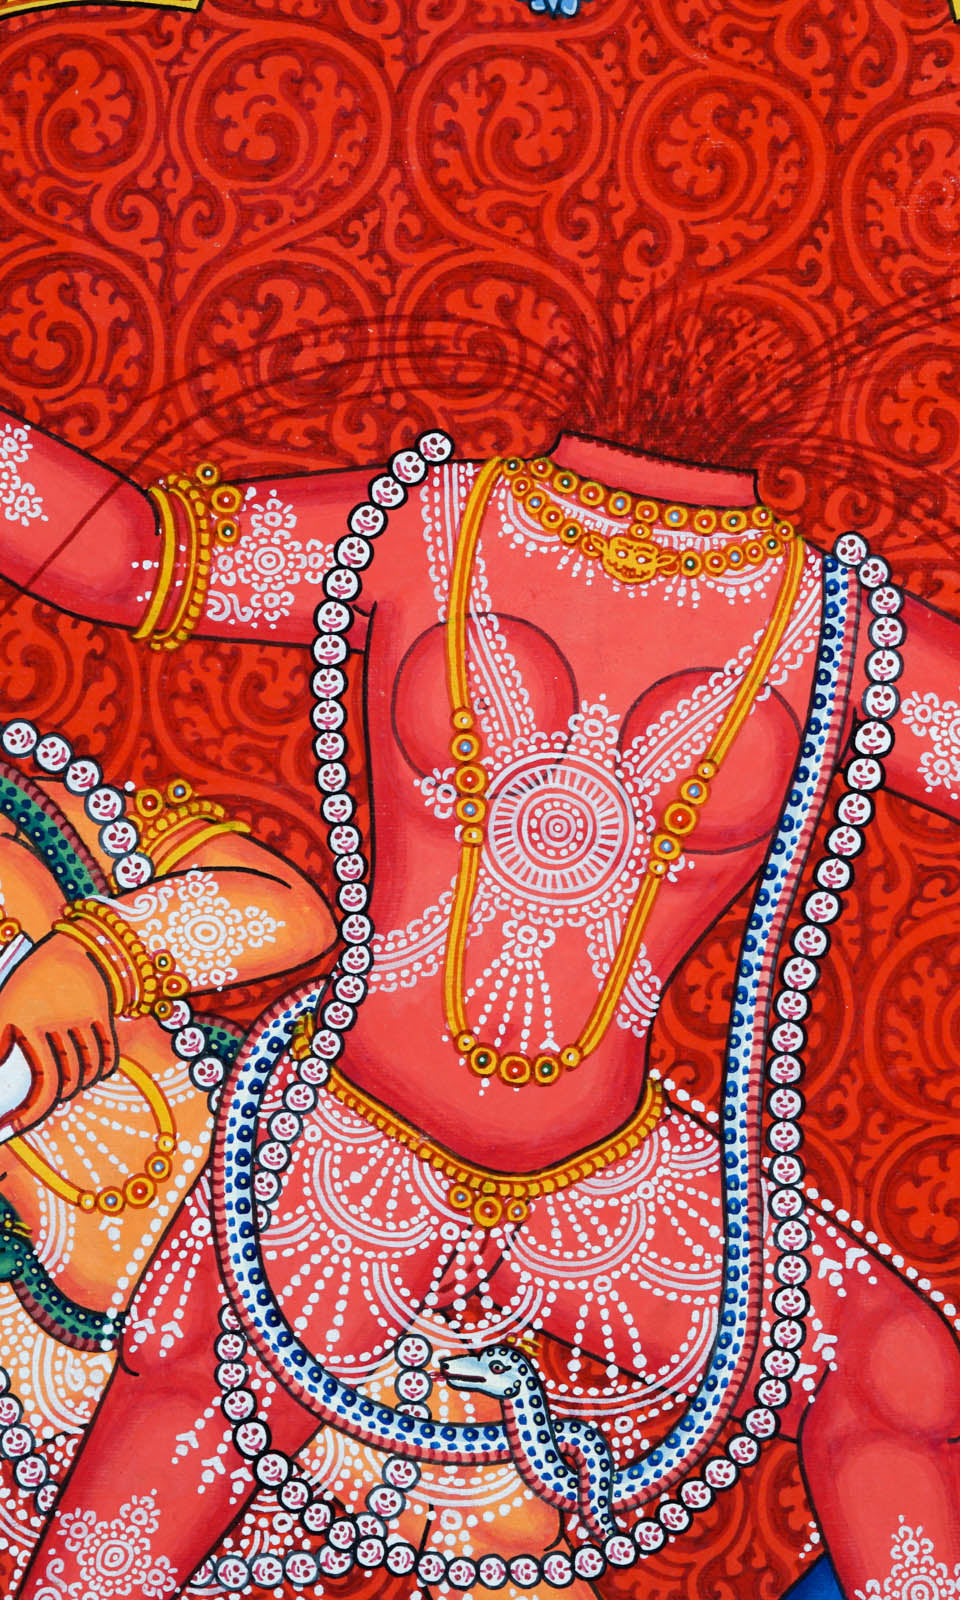 Wrathful deity - Chinnamasta Thangka - Best handpainted thangka painting - LuckyThanka